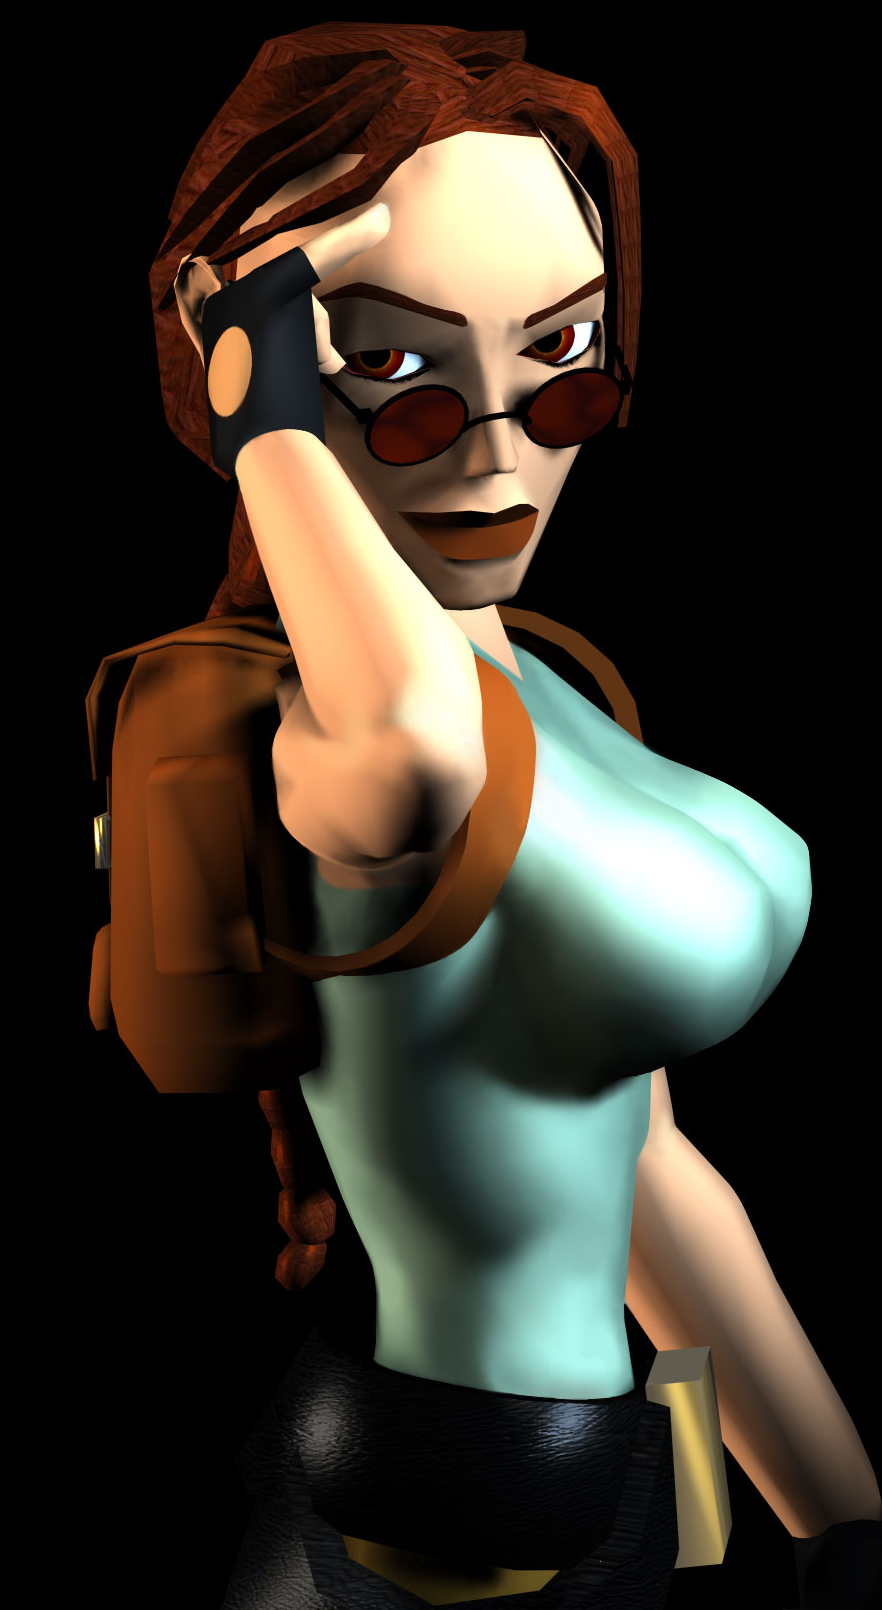 Lara Croft: Tomb Raider – A Origem da Vida, Wiki SBTpedia